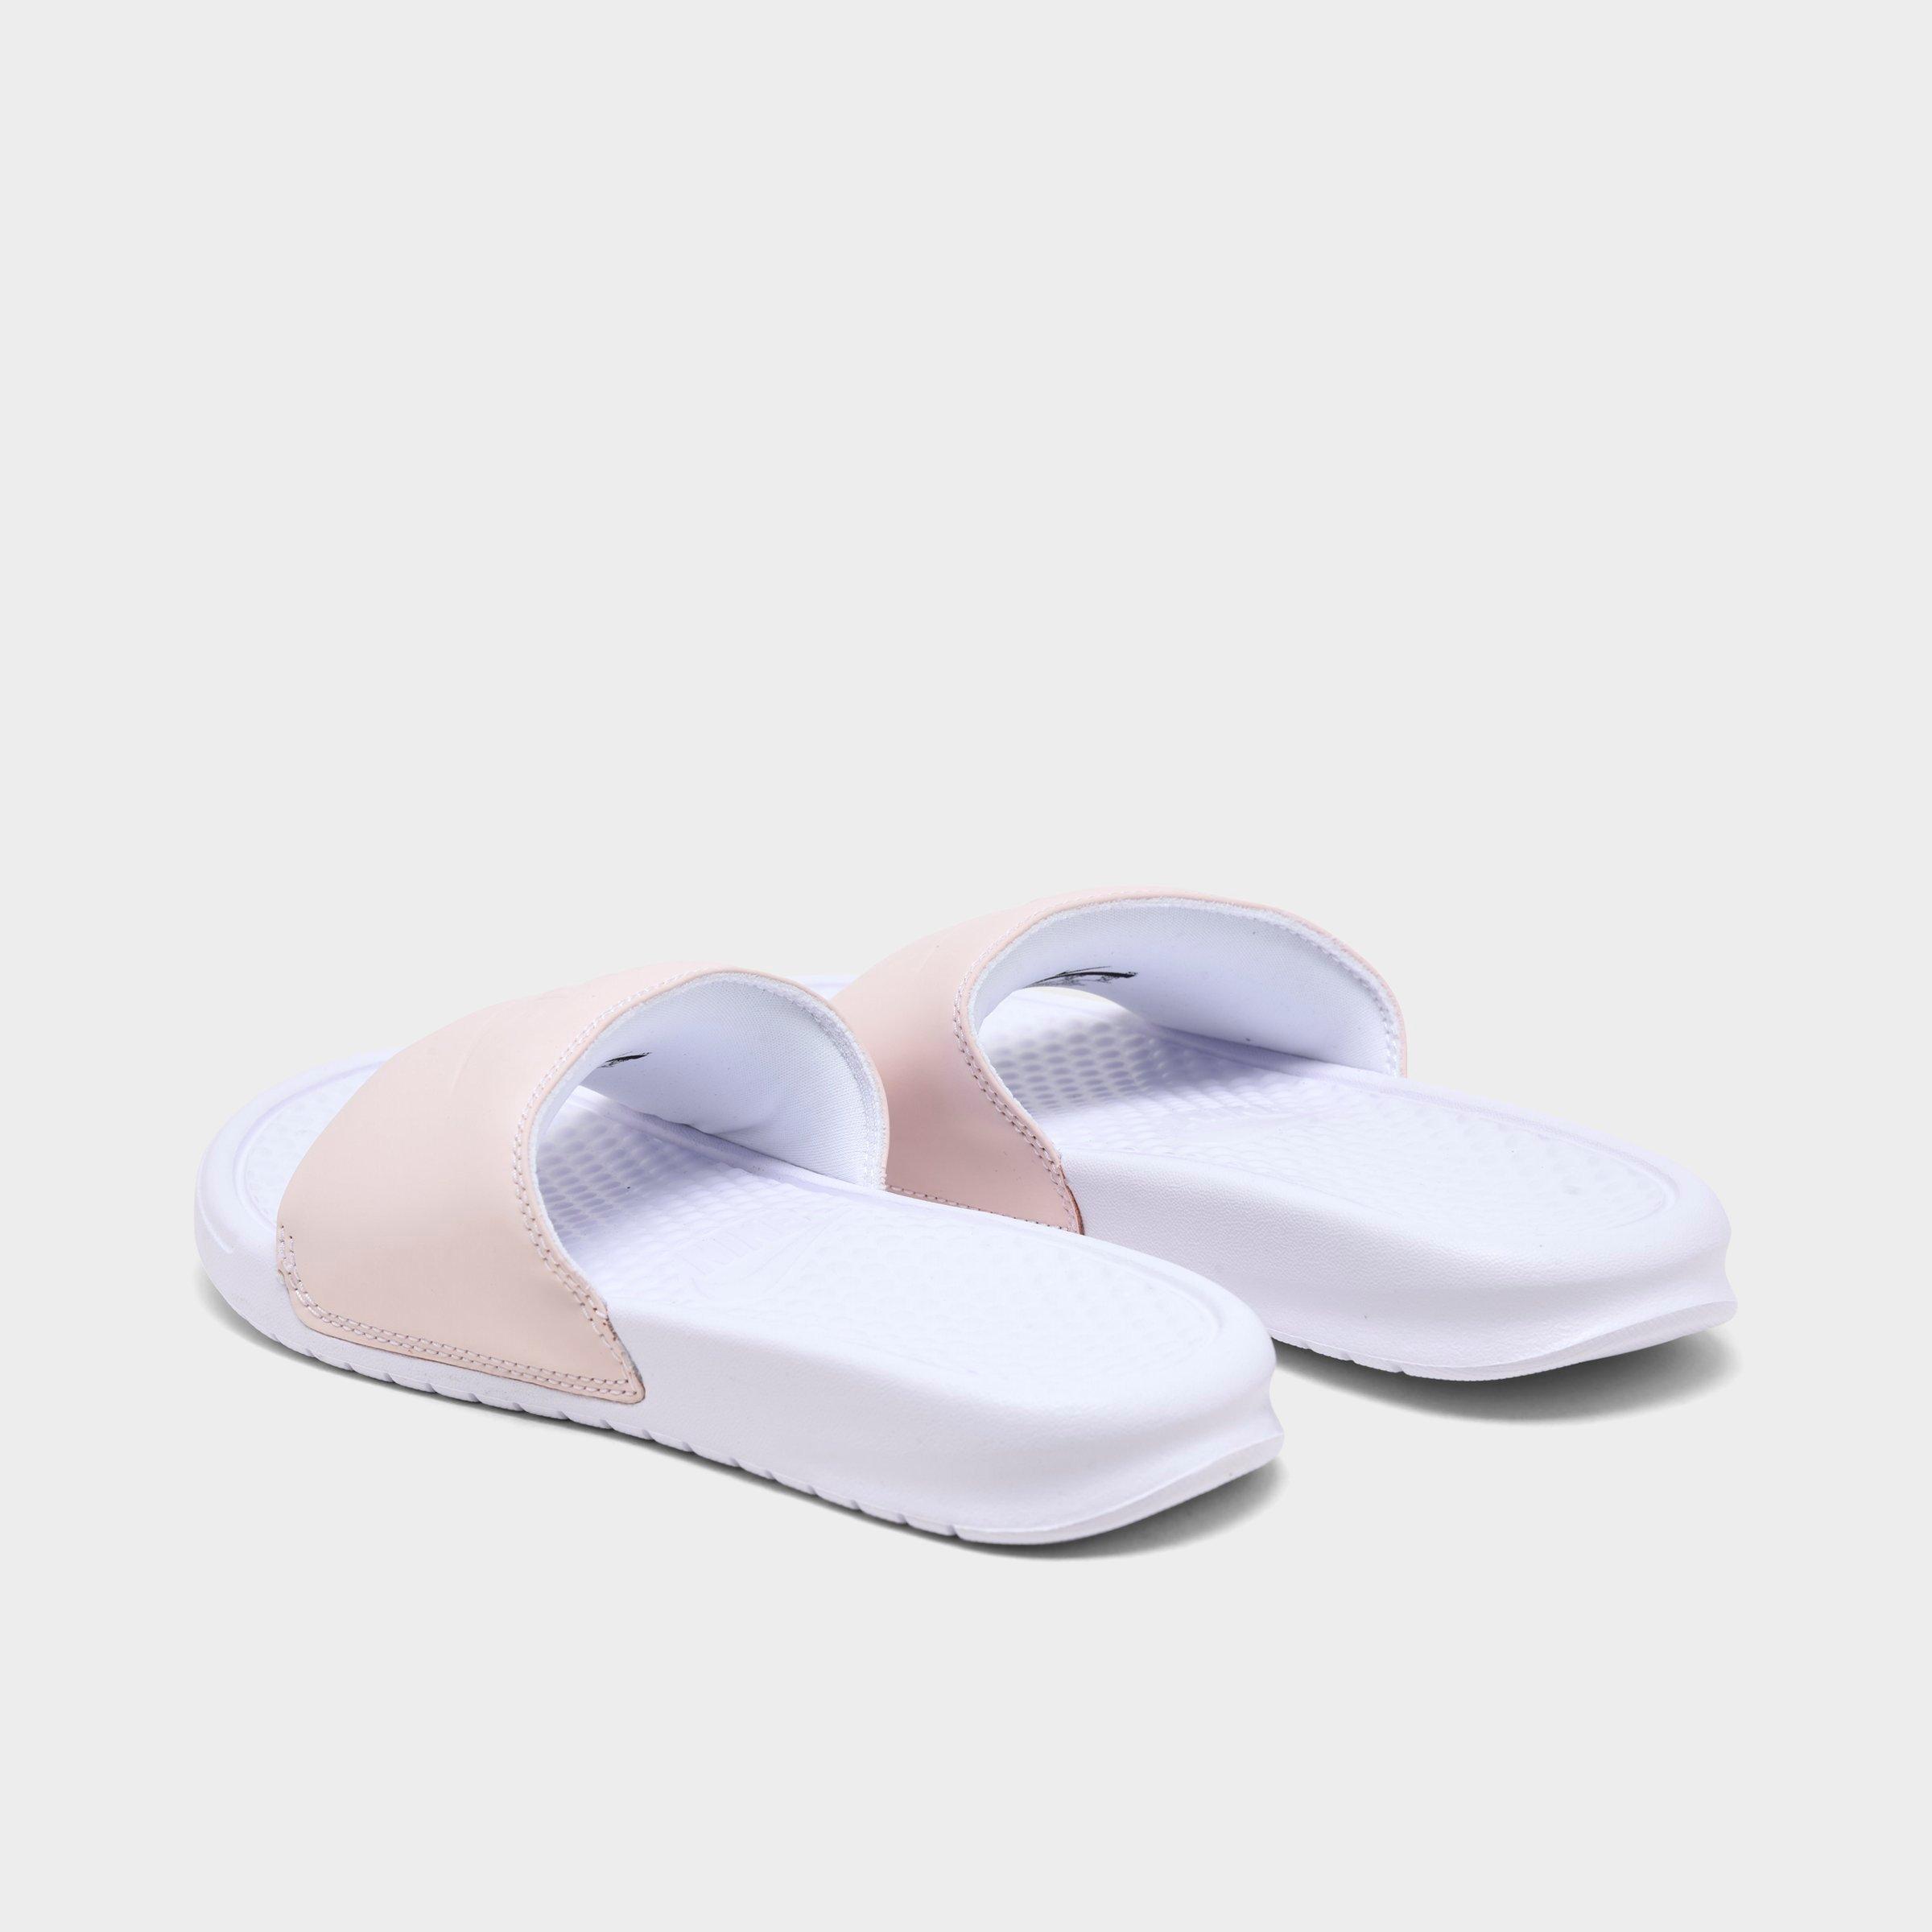 women's nike benassi jdi slide sandals